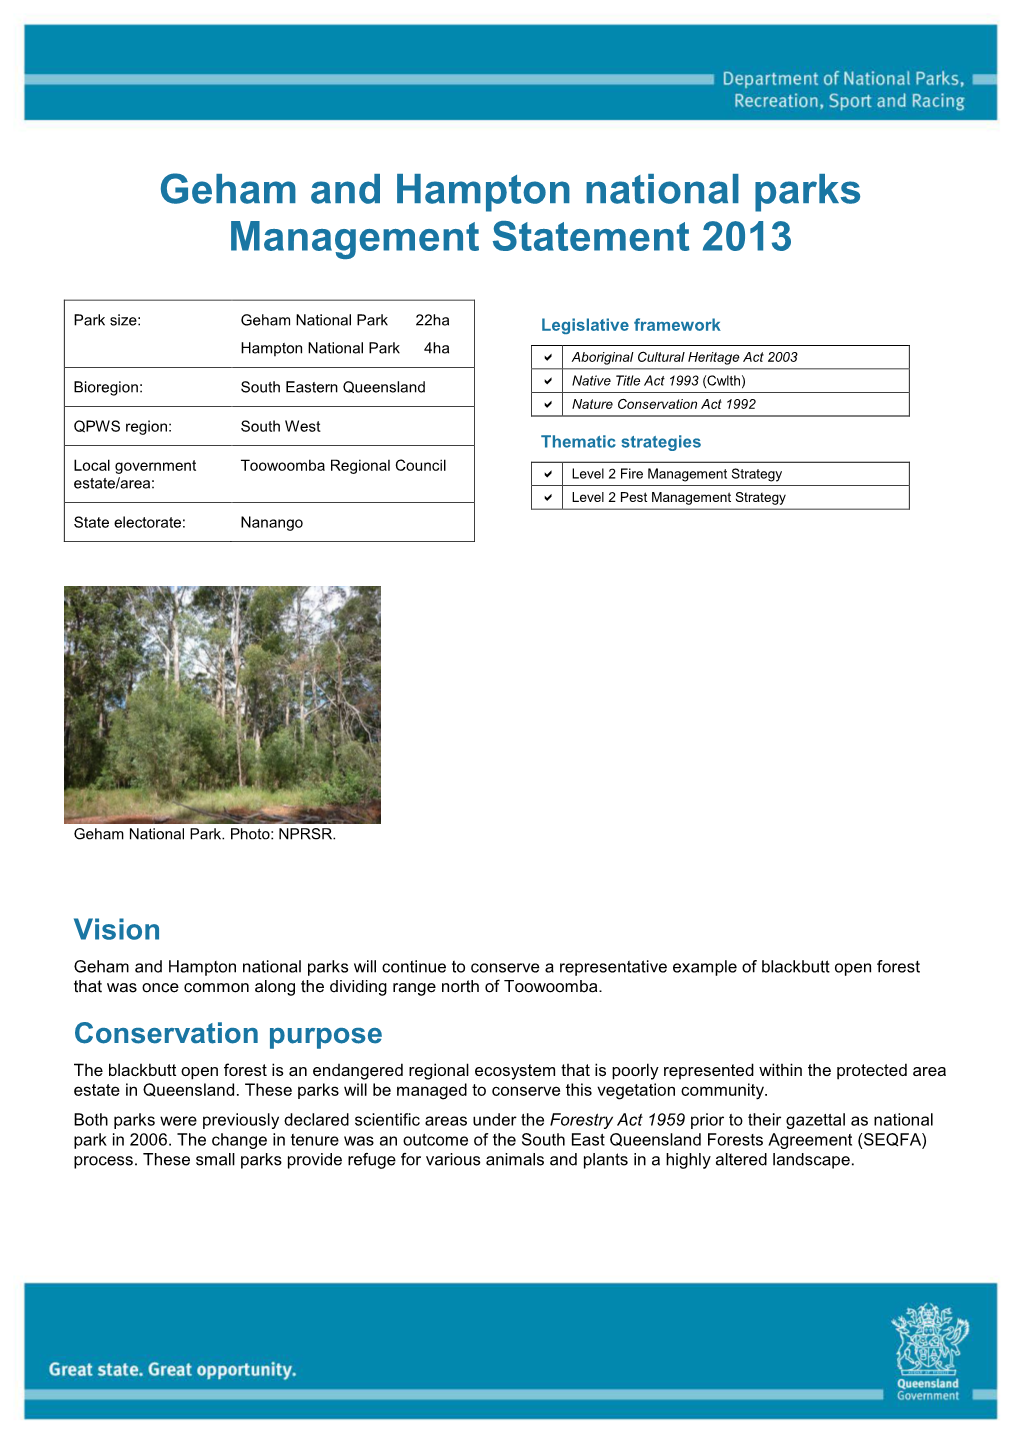 Geham and Hampton National Parks Management Statement 2013